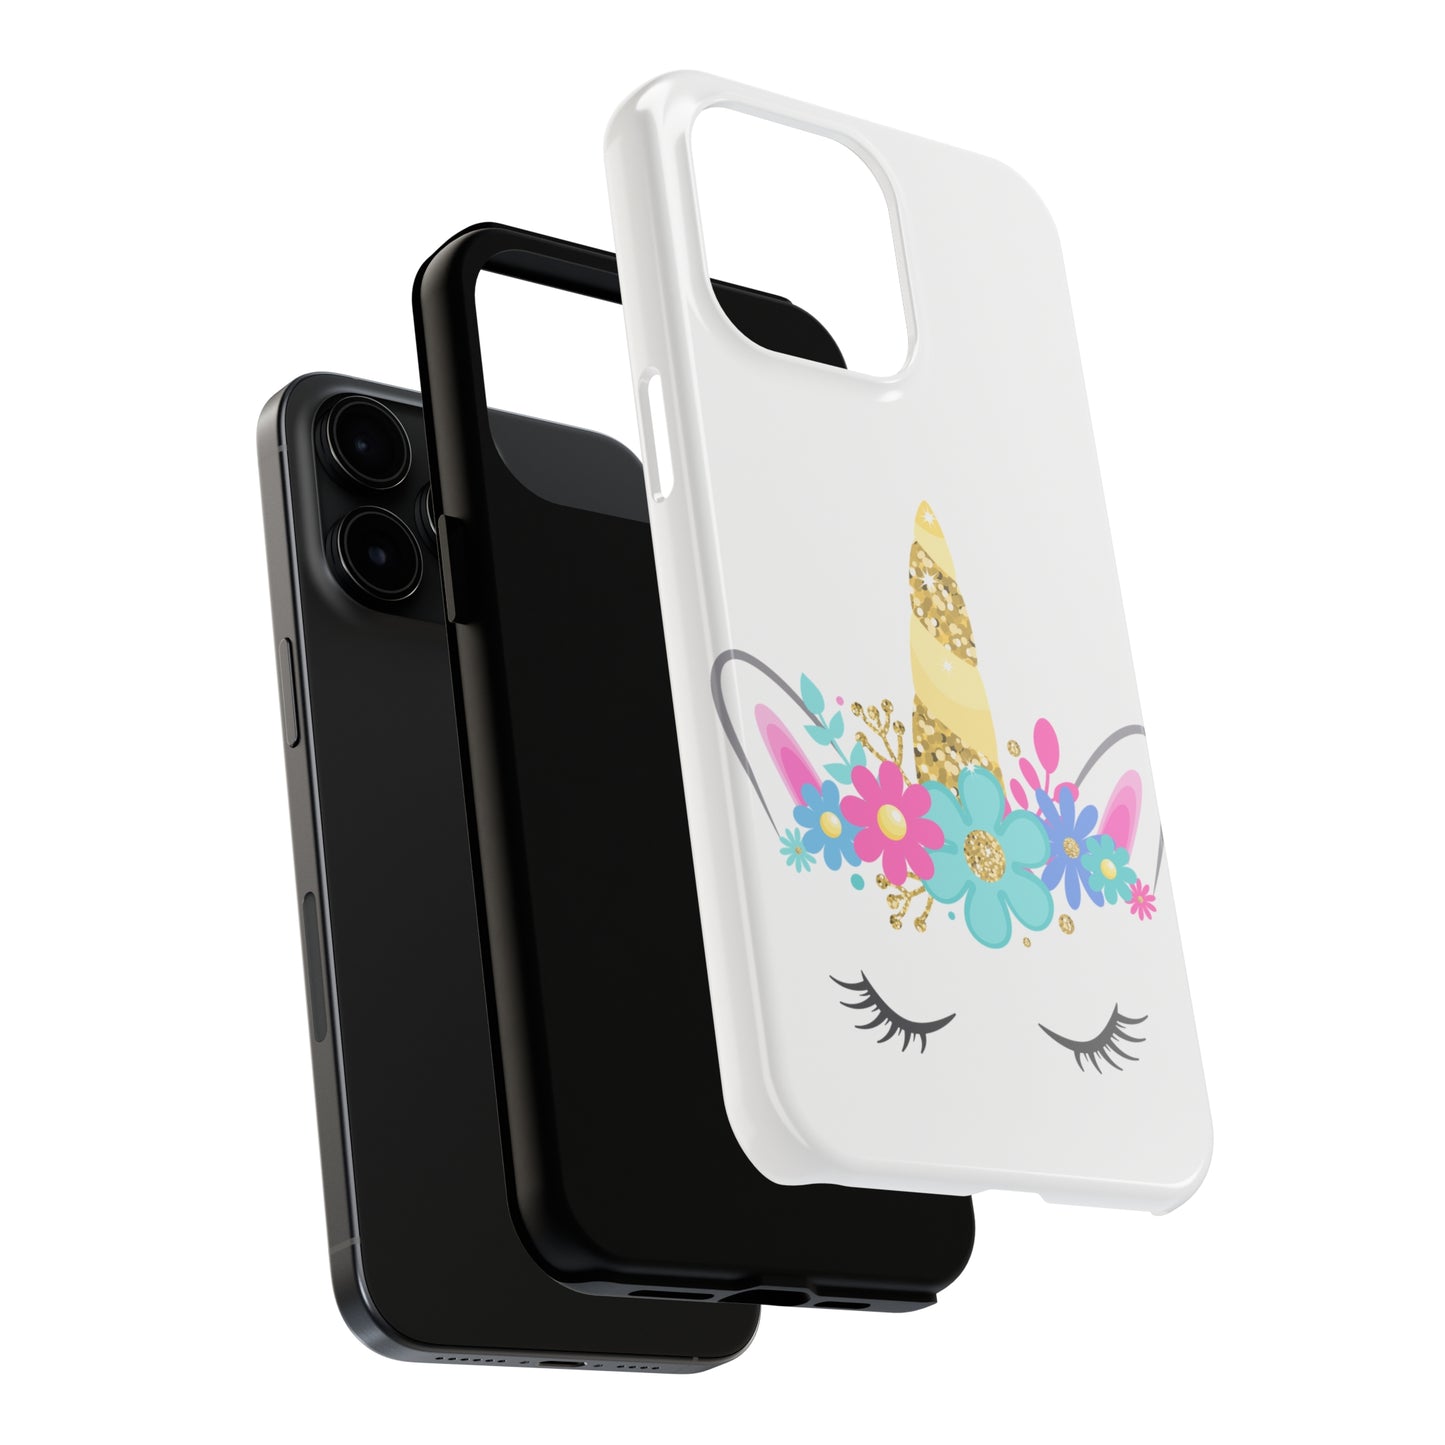 Unicorn Mask: iPhone Tough Case Design - Wireless Charging - Superior Protection - Original Designs by TheGlassyLass.com